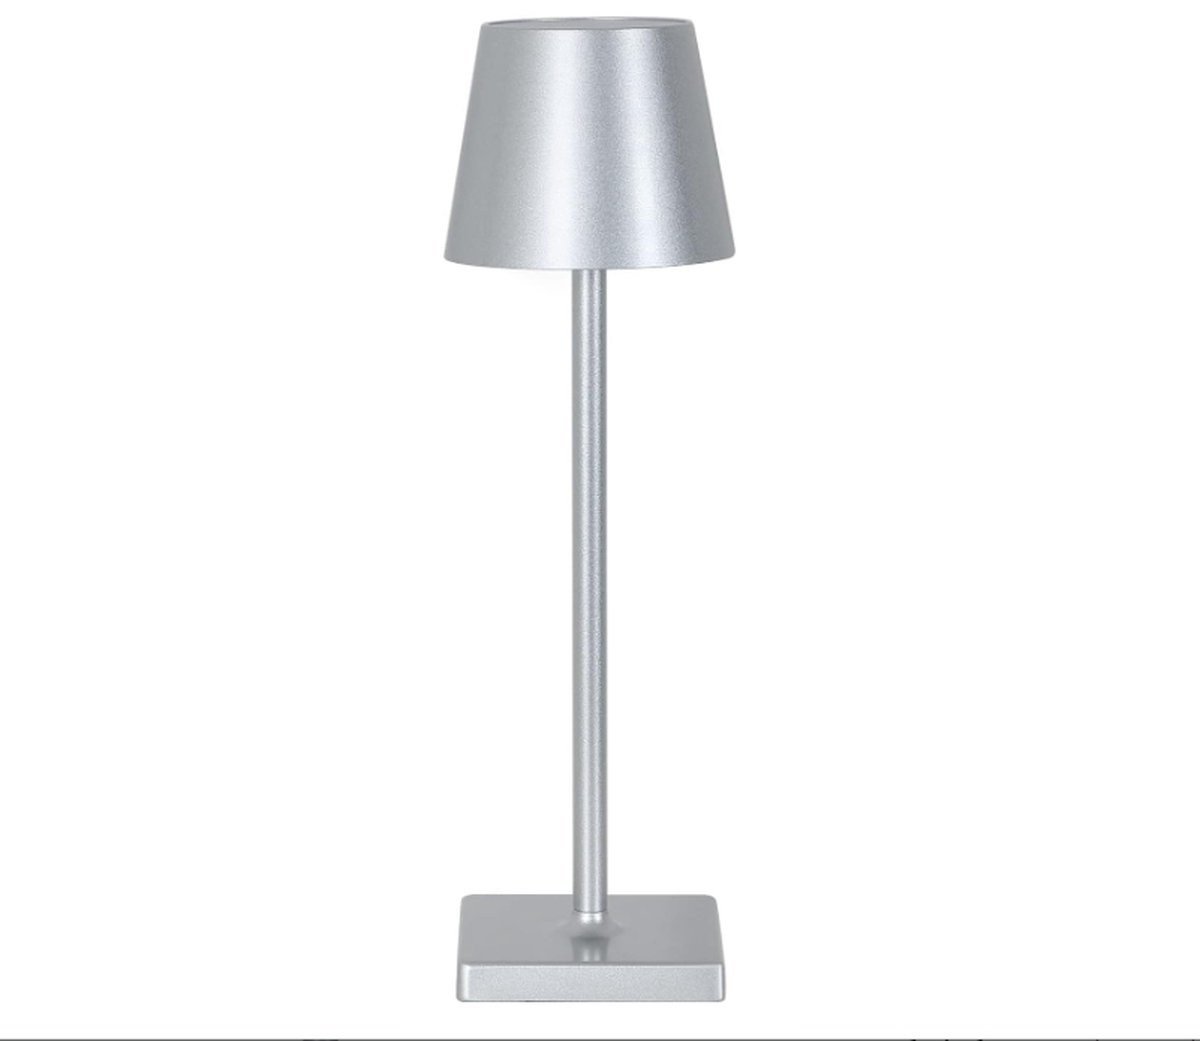 Goeco-Tafellamp-Draadloos-Dimbaar-Aanraakbediening-Warm wit-3000K-Aluminium-Modern nachtlampje-Bureaulamp-IP54-Oplaadbaar via USB-Draagbaar-Buiten-Zilver